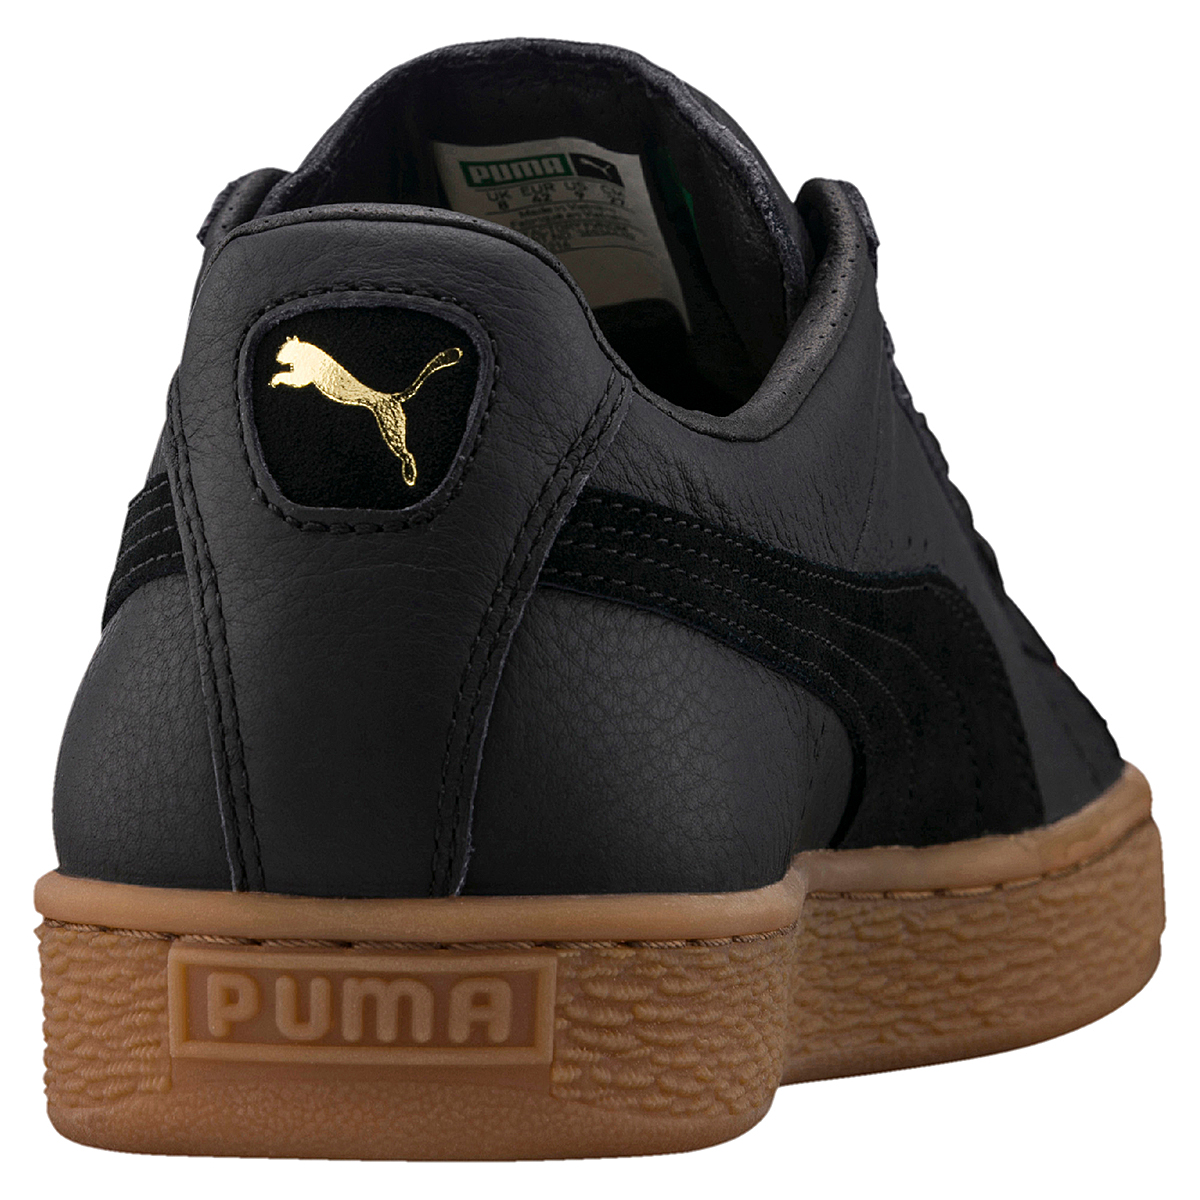 Puma Basket Classic Gum Deluxe UNISEX Sneaker 365366 02 schwarz